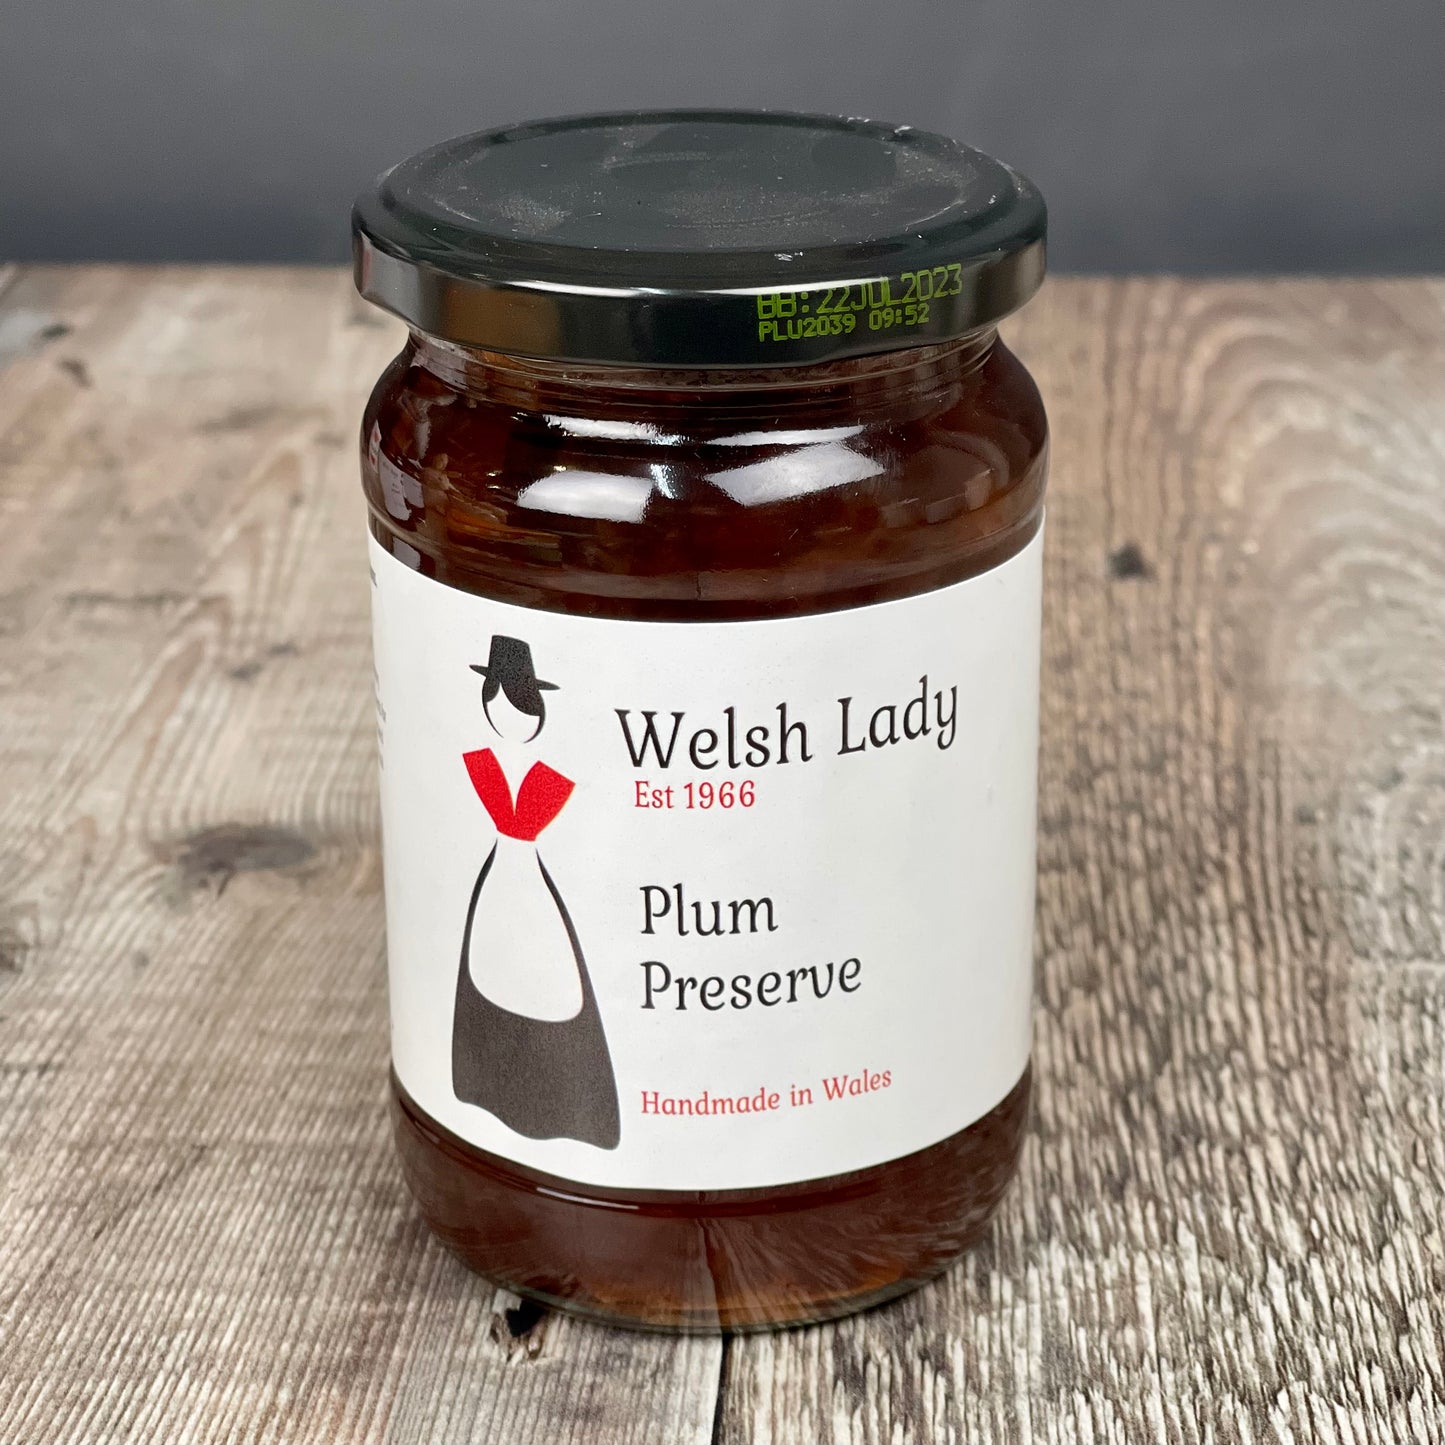 Plum Preserve by welsh Lady Preserves